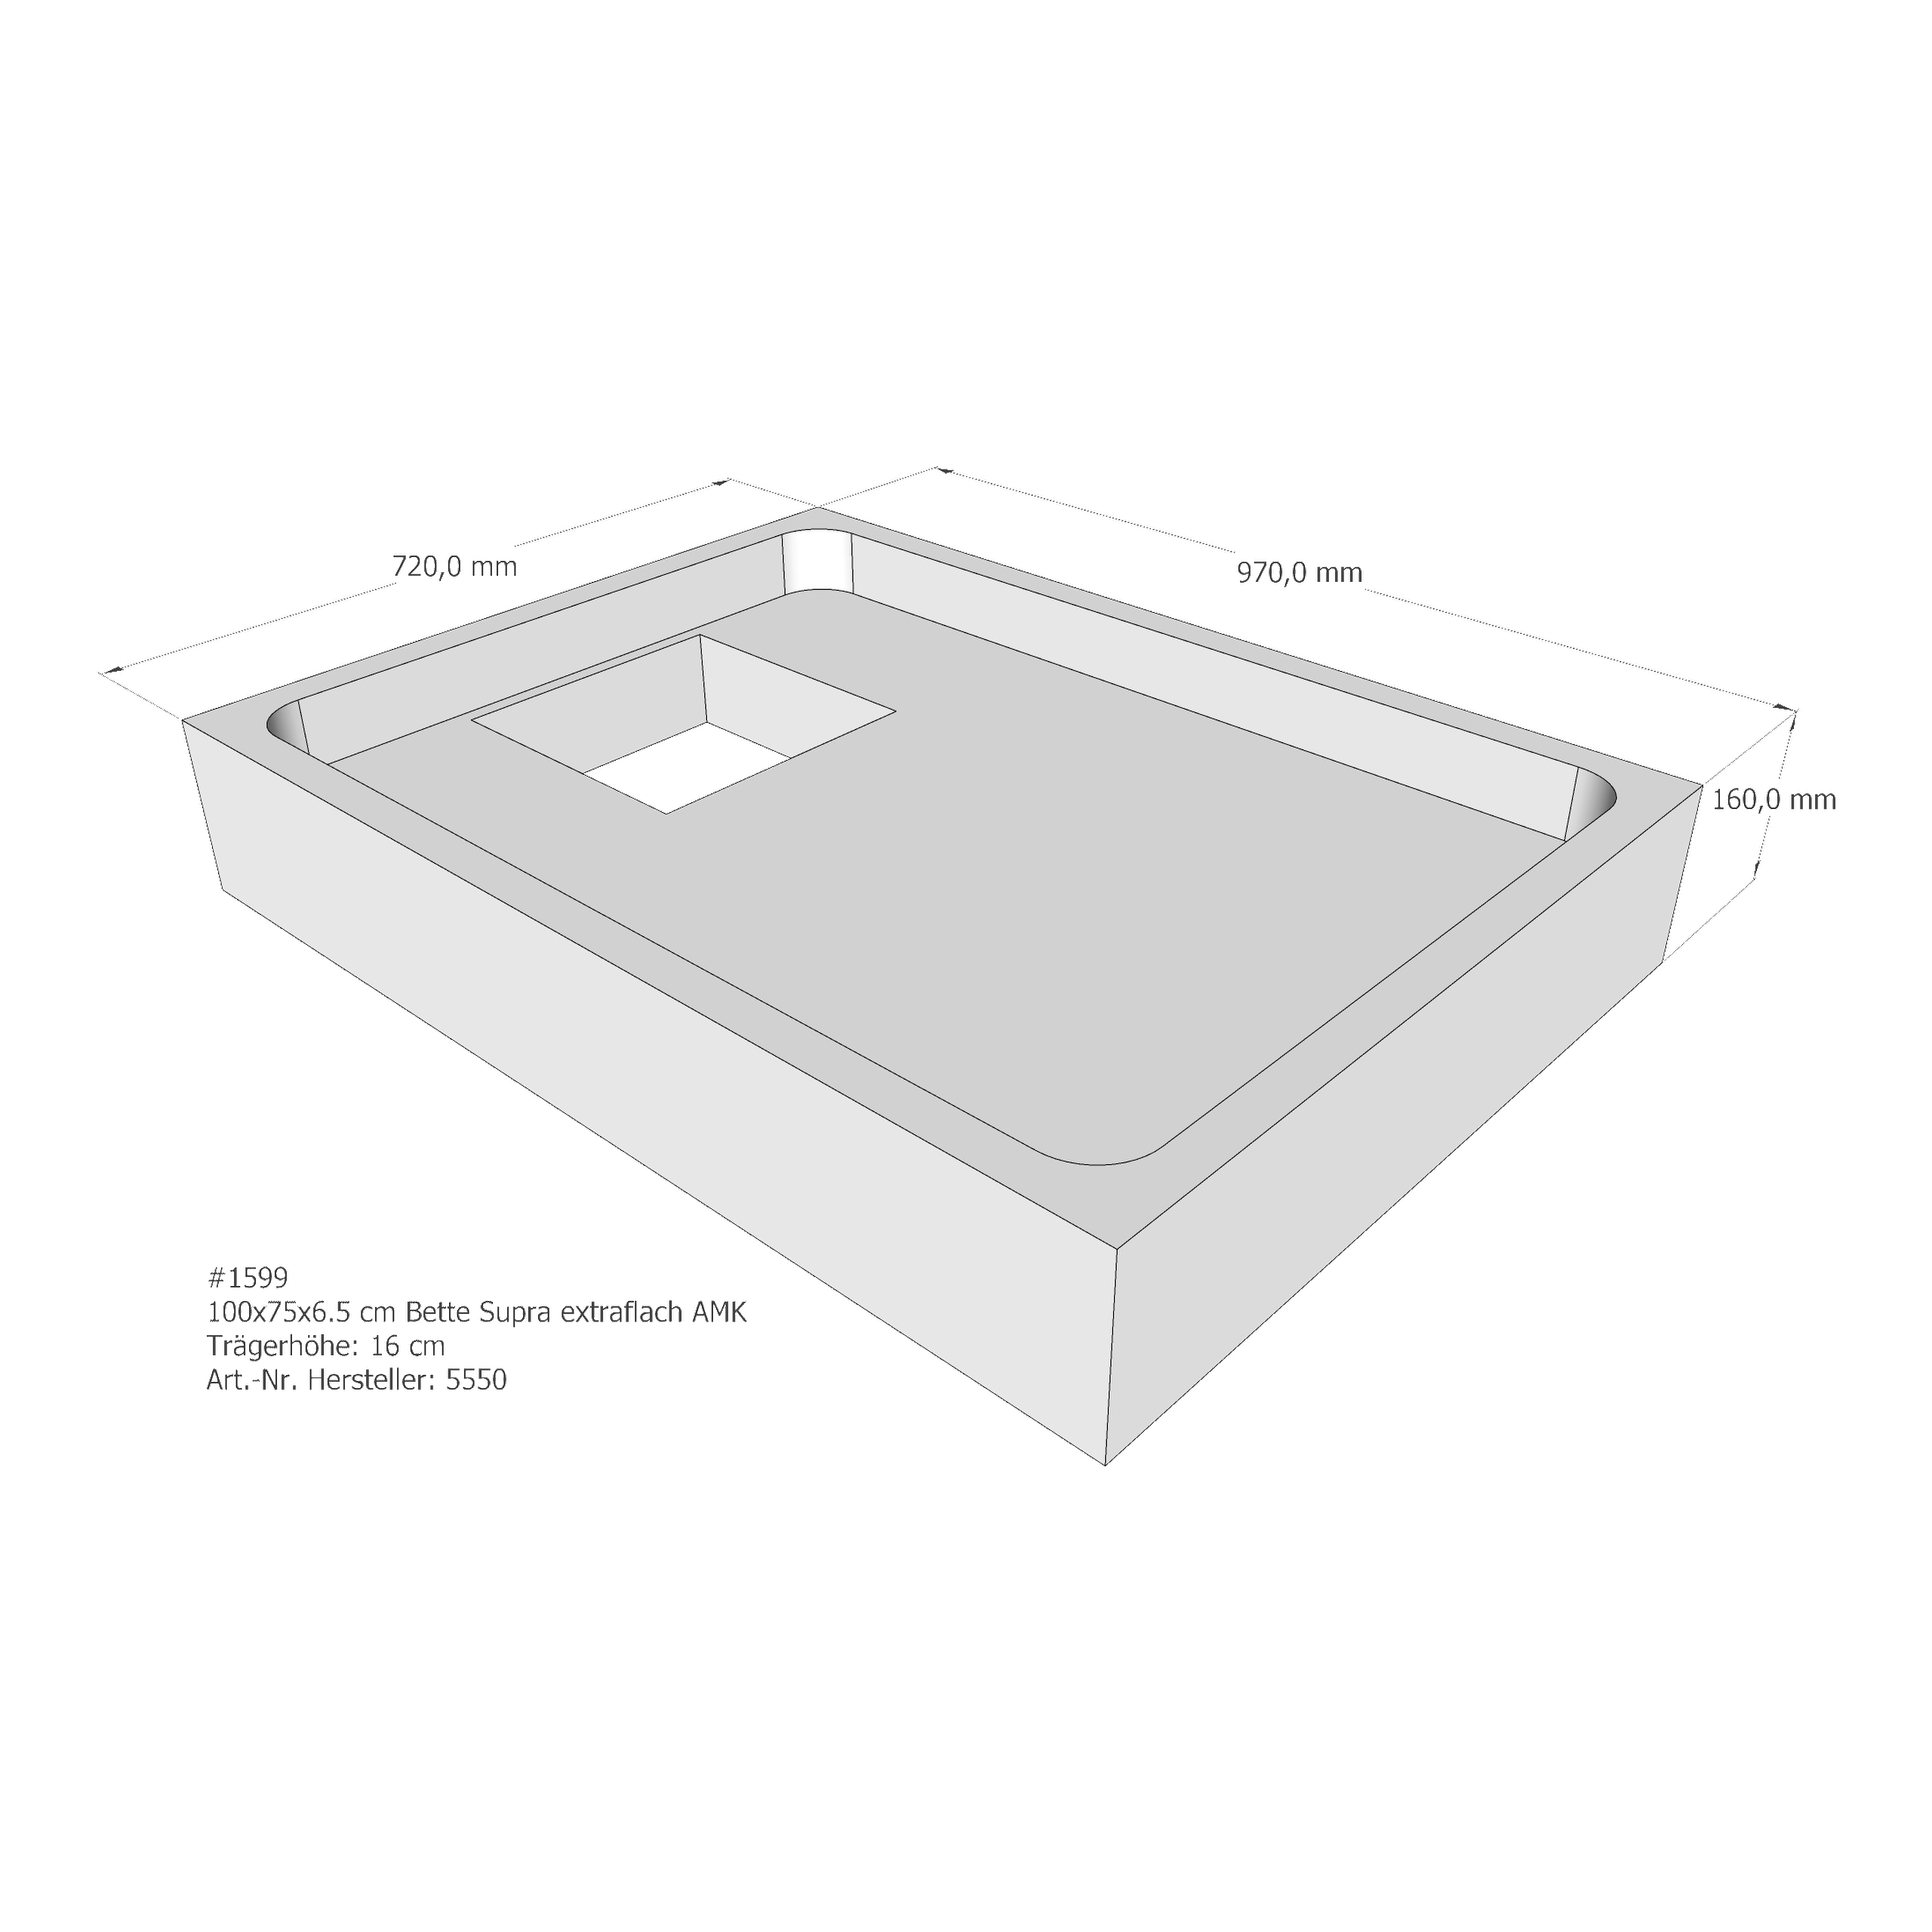 Duschwannenträger Bette BetteSupra (extraflach) 100x75x6,5 cm AMK210